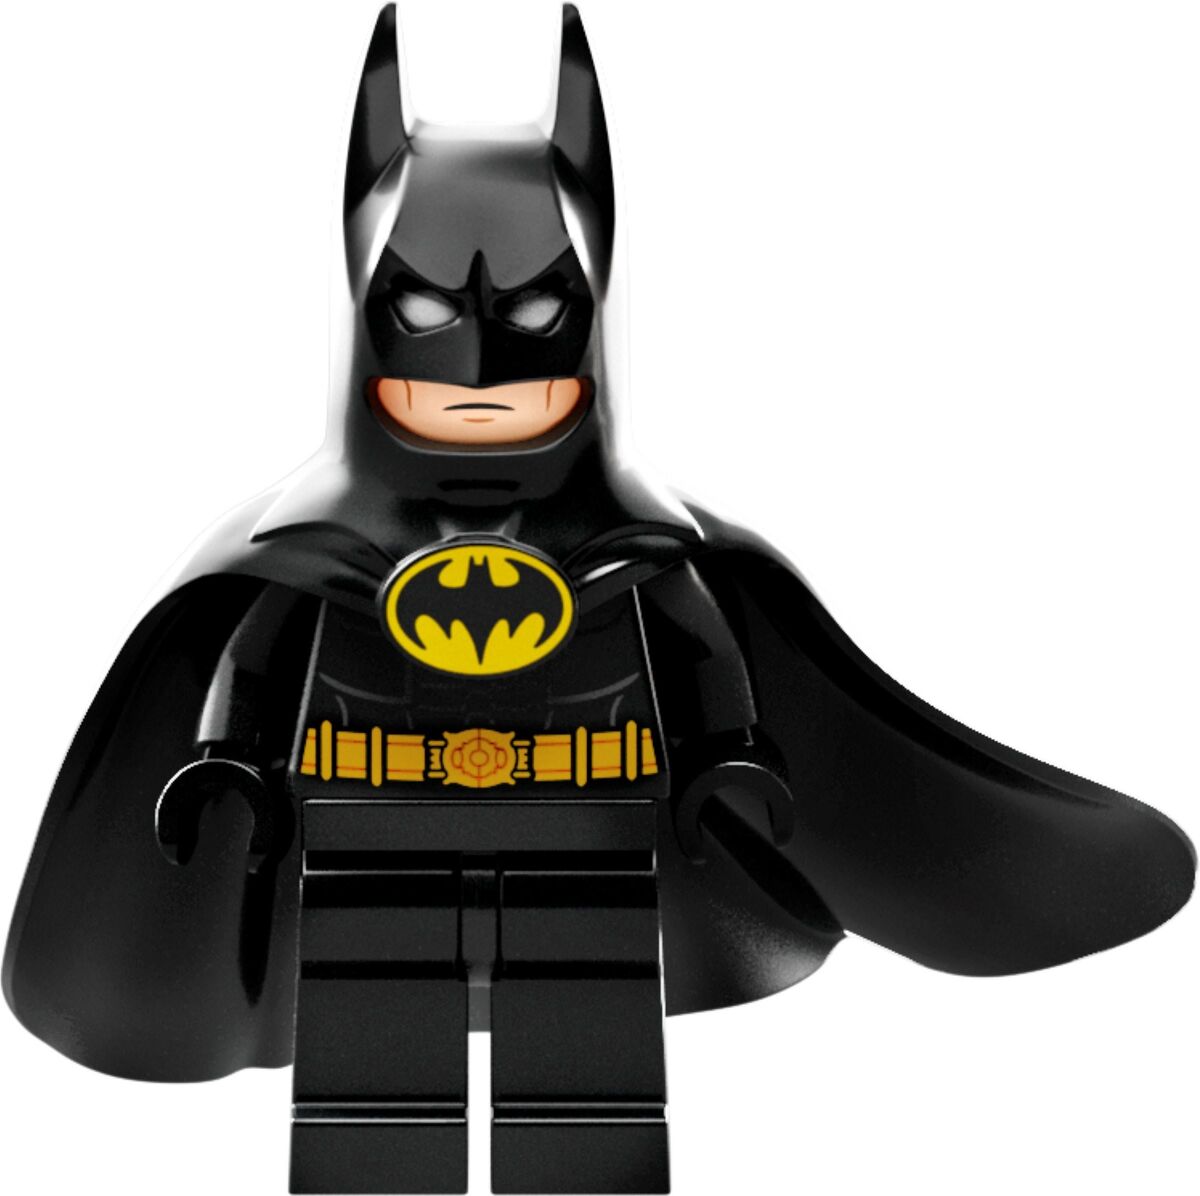 LEGO BATMAN MINI FIGURES LIMITED EDITION